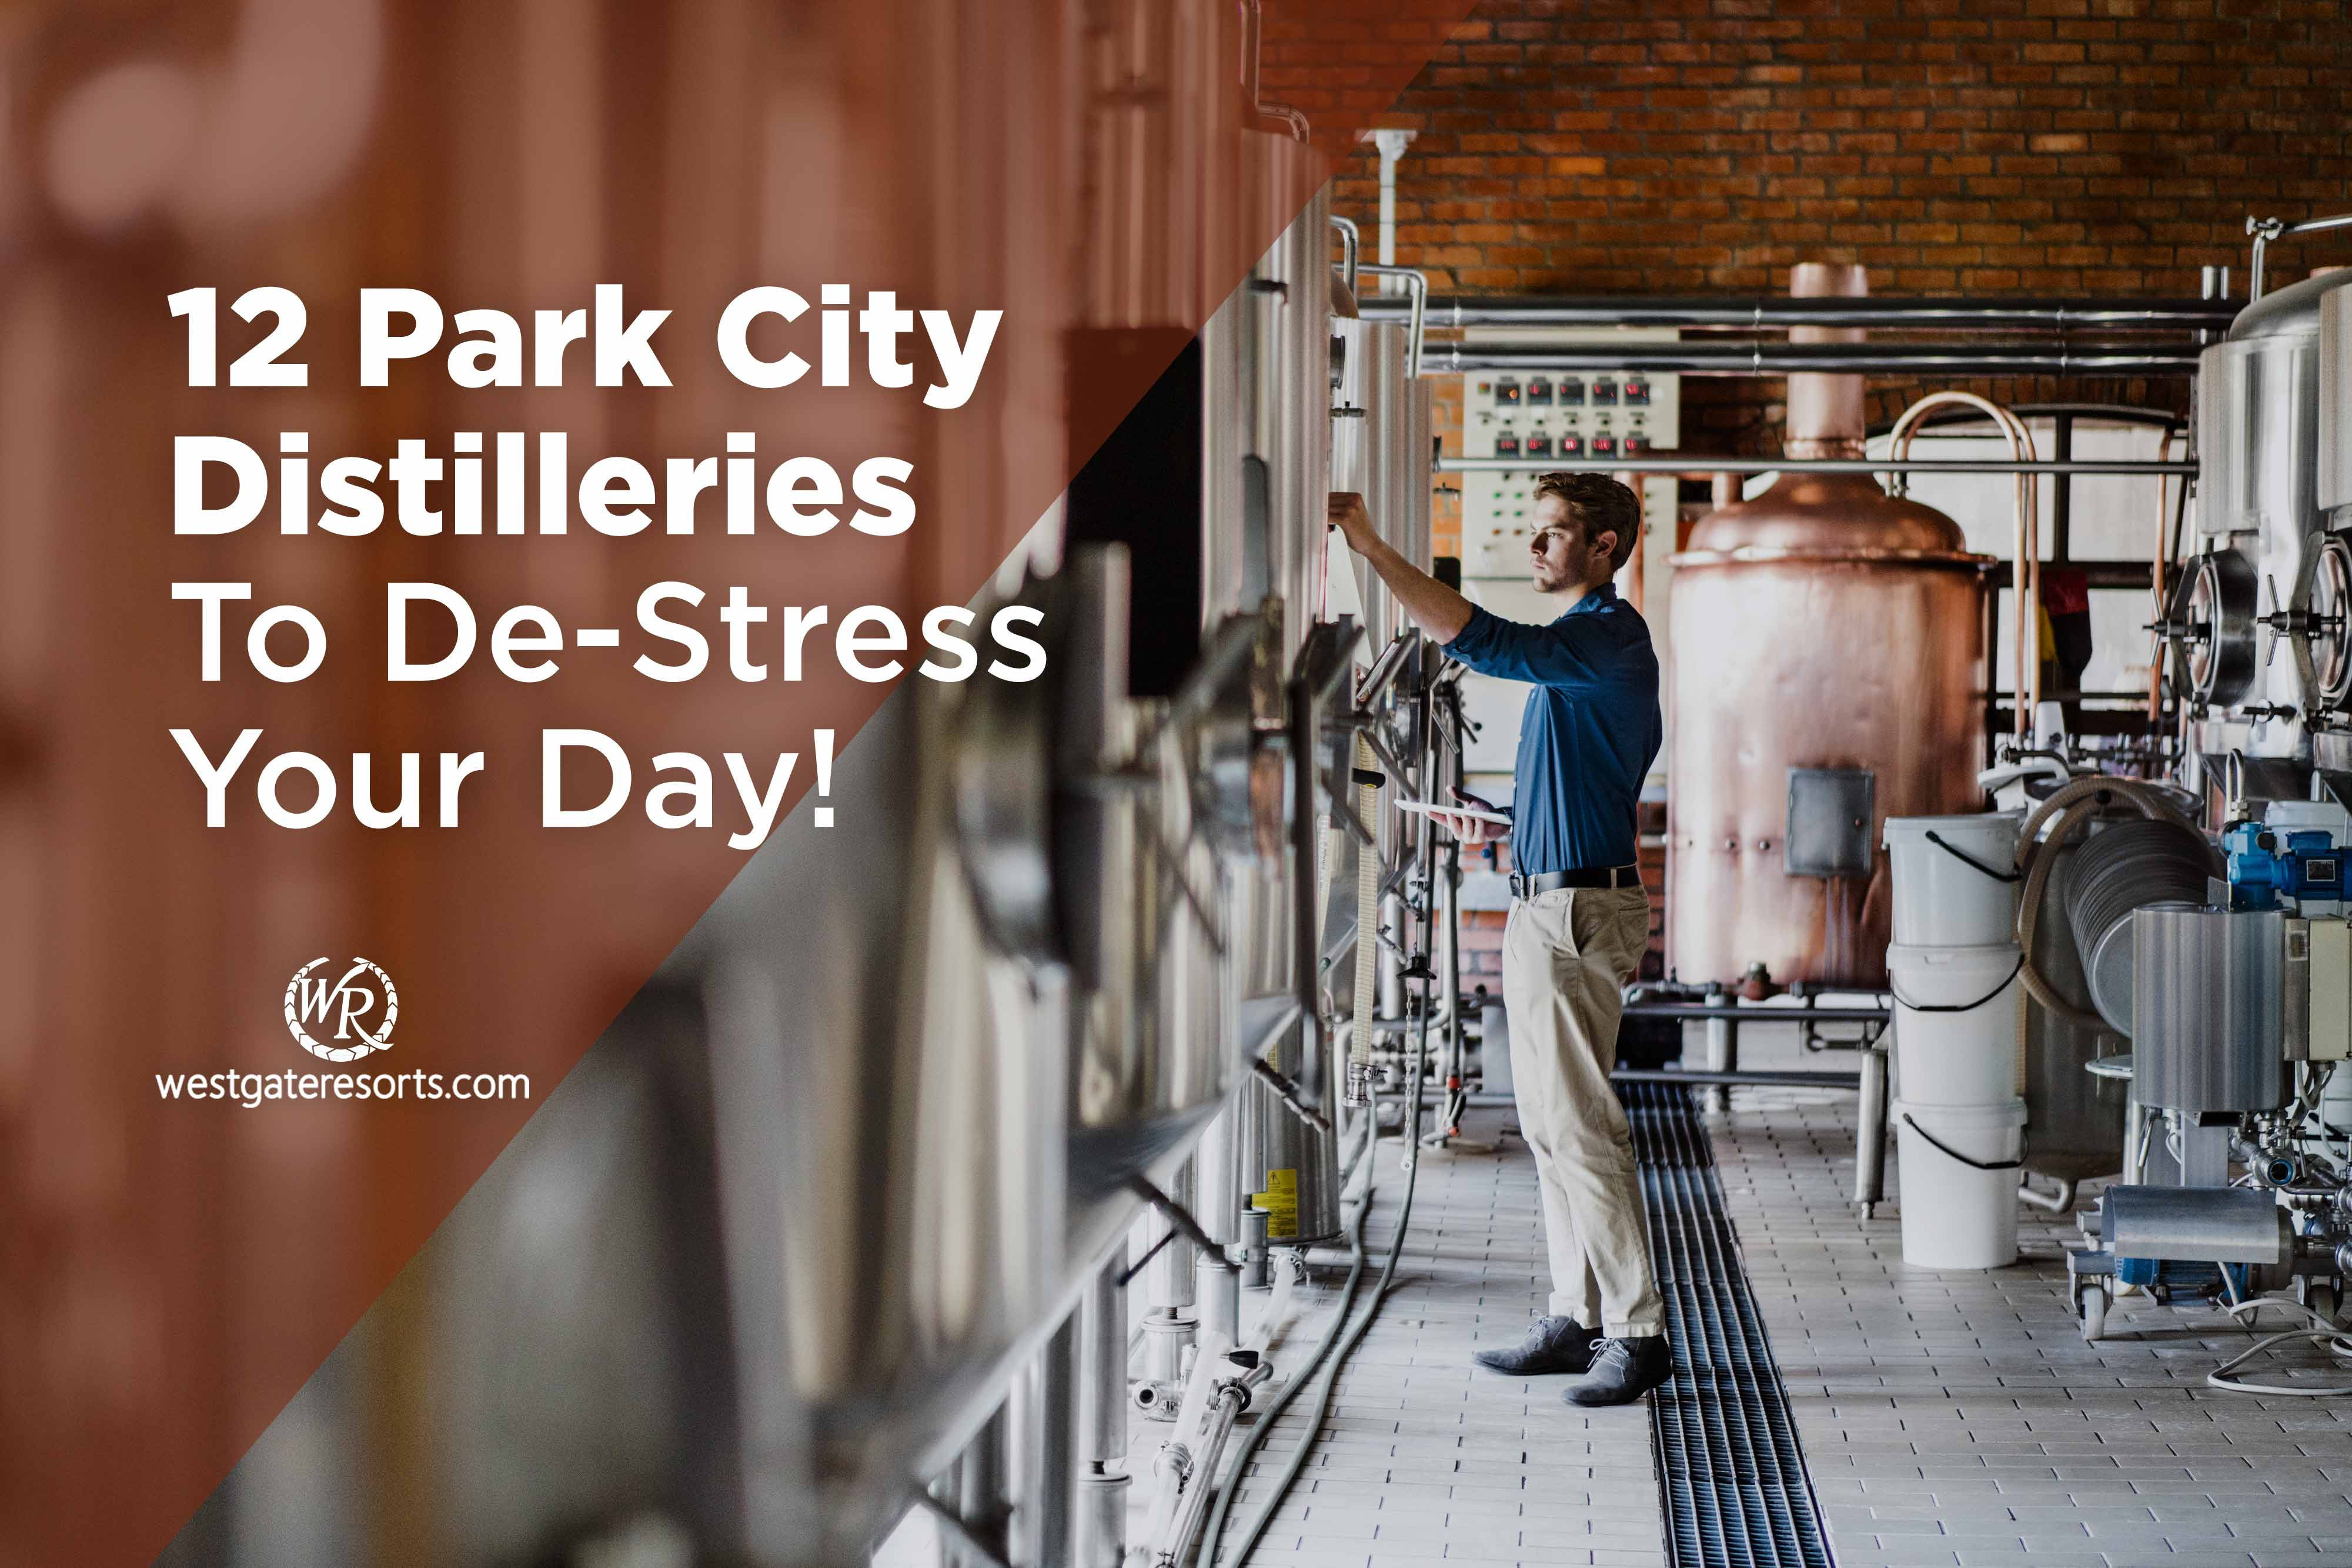 12 Park City Distilleries To De-Stress Your Day! | A Park City Distillery Guide